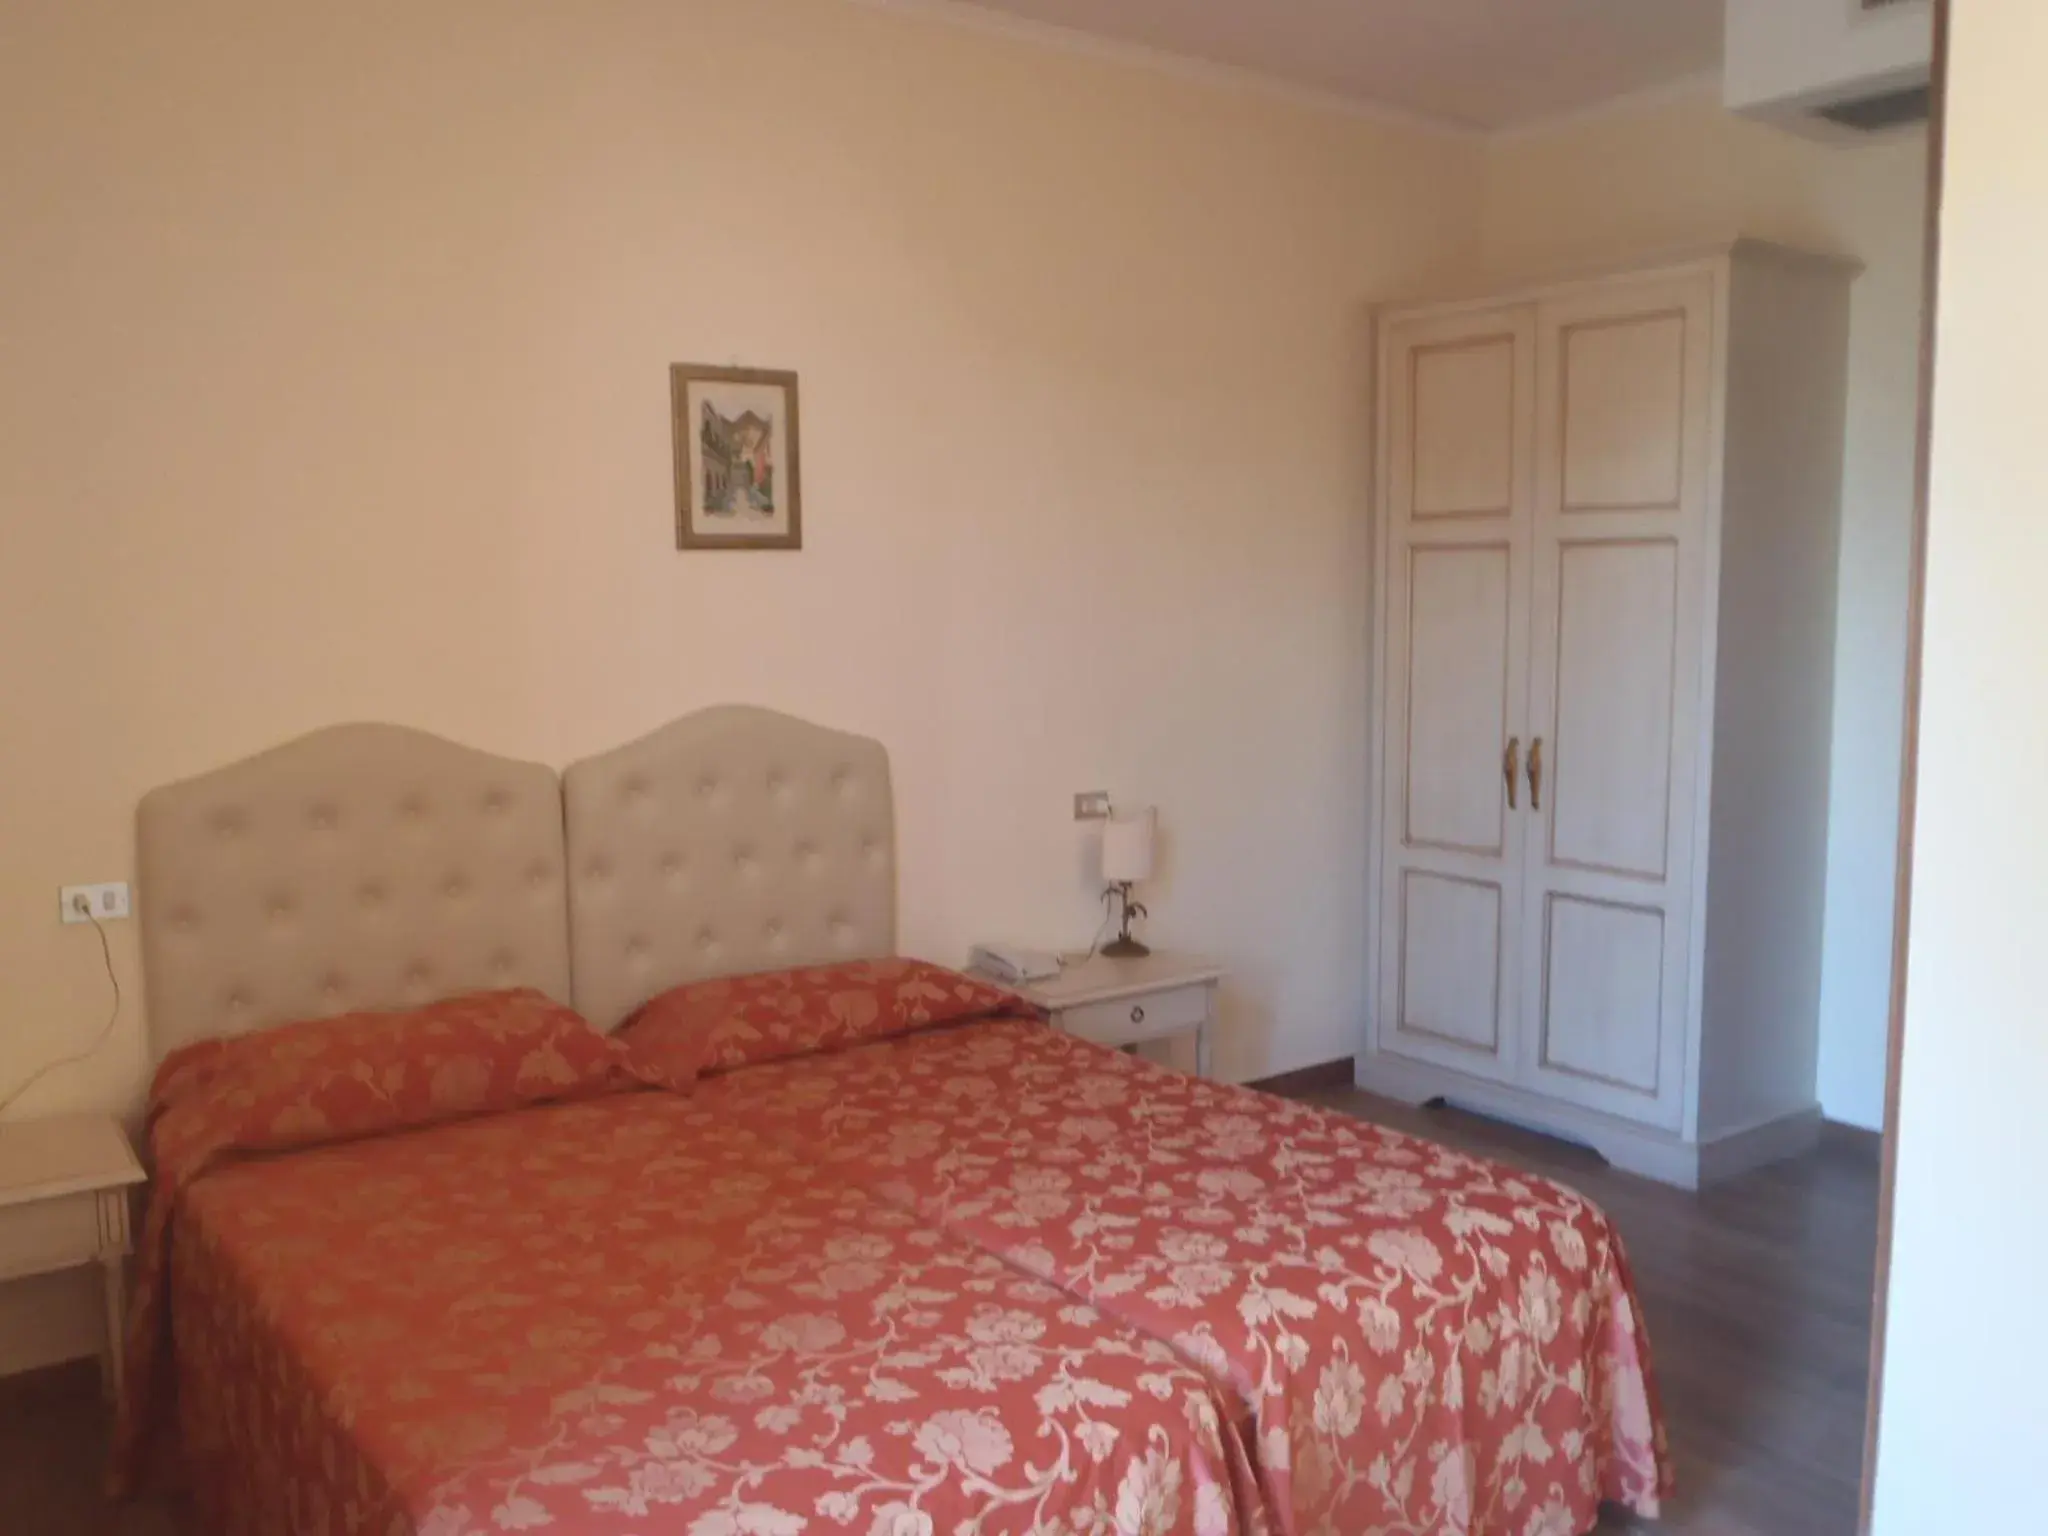 Bed, Room Photo in Hotel Ipanema